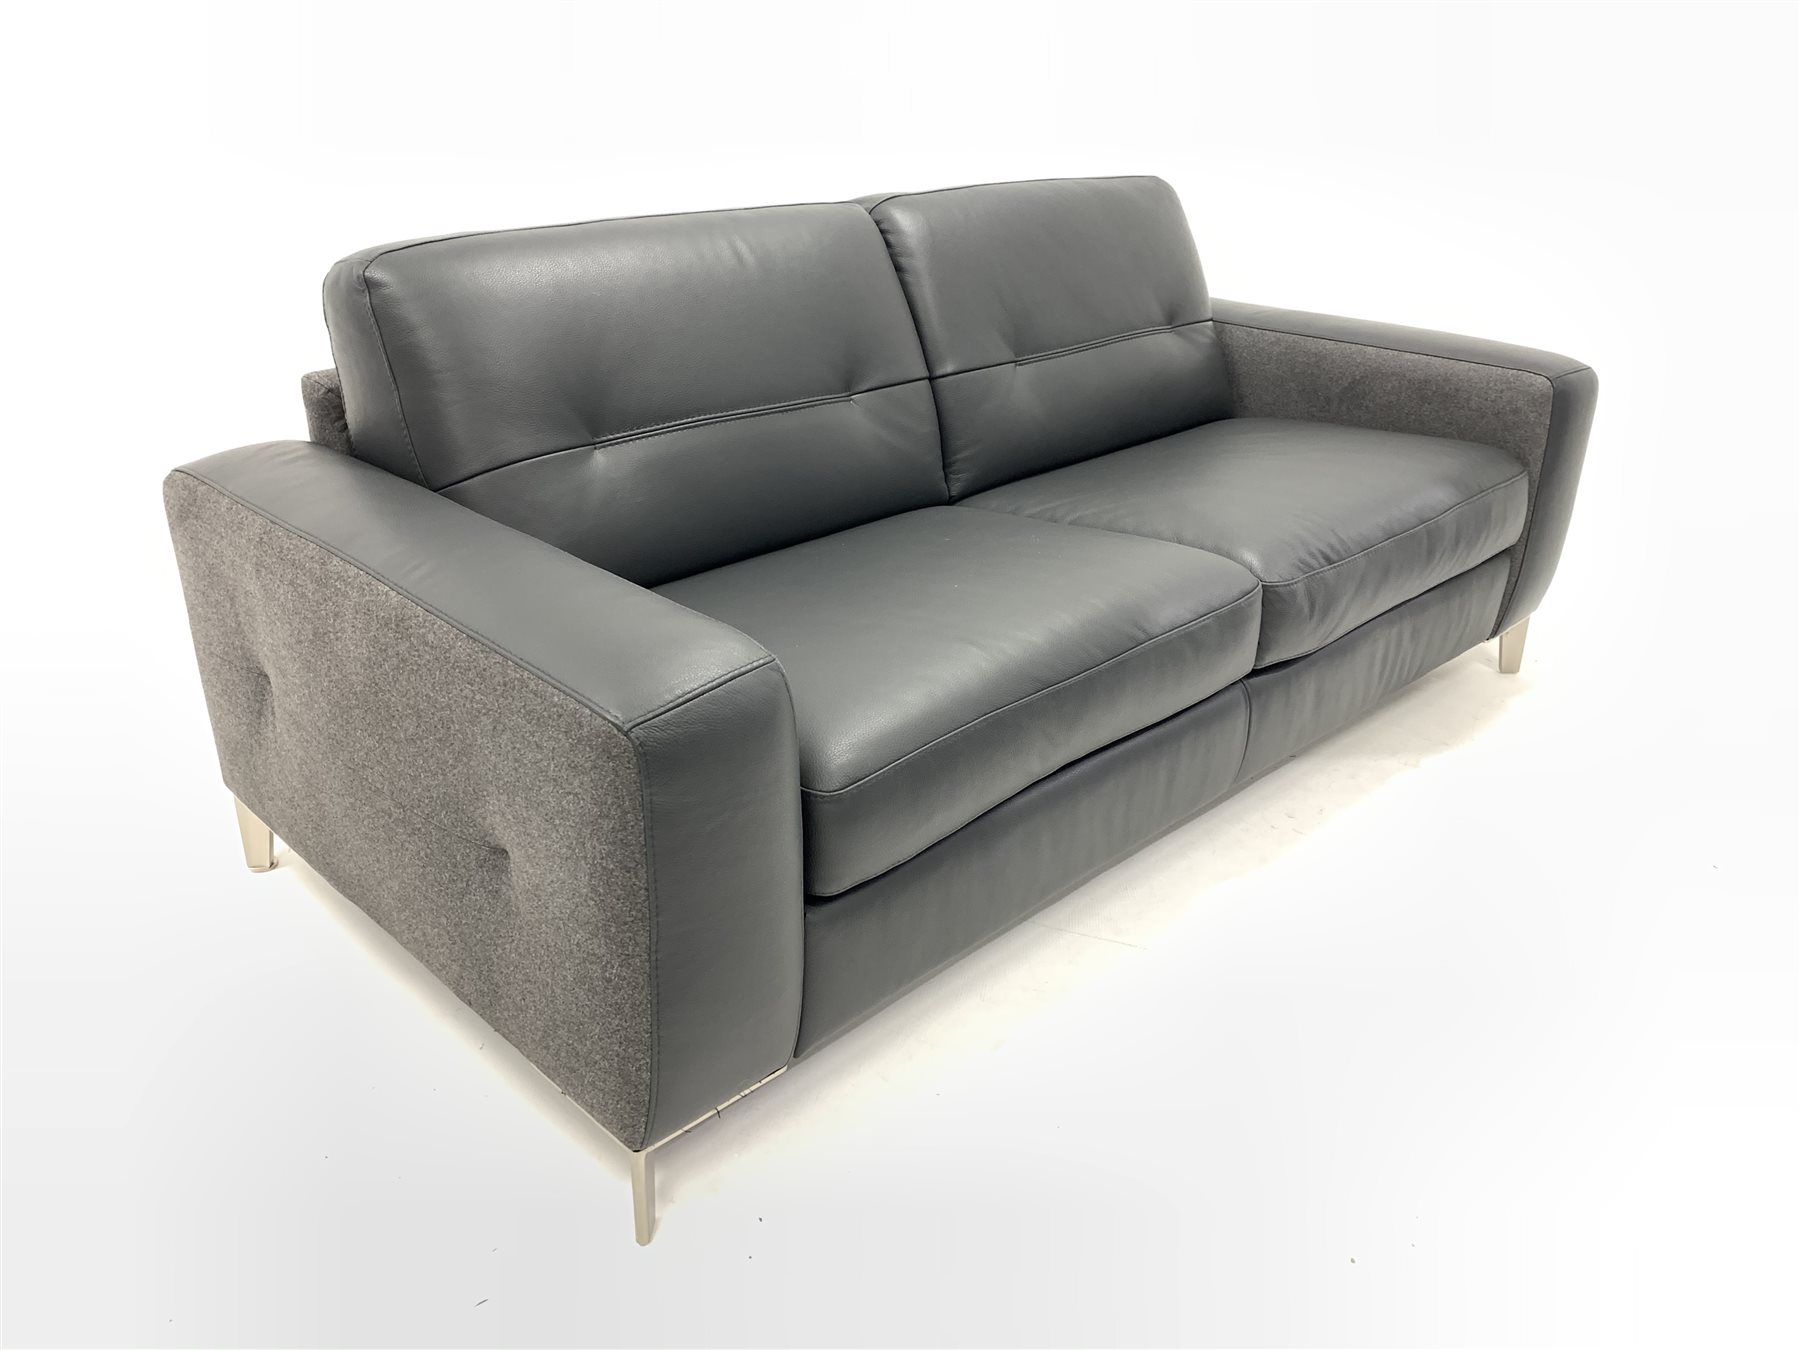 leather republic sofa bed